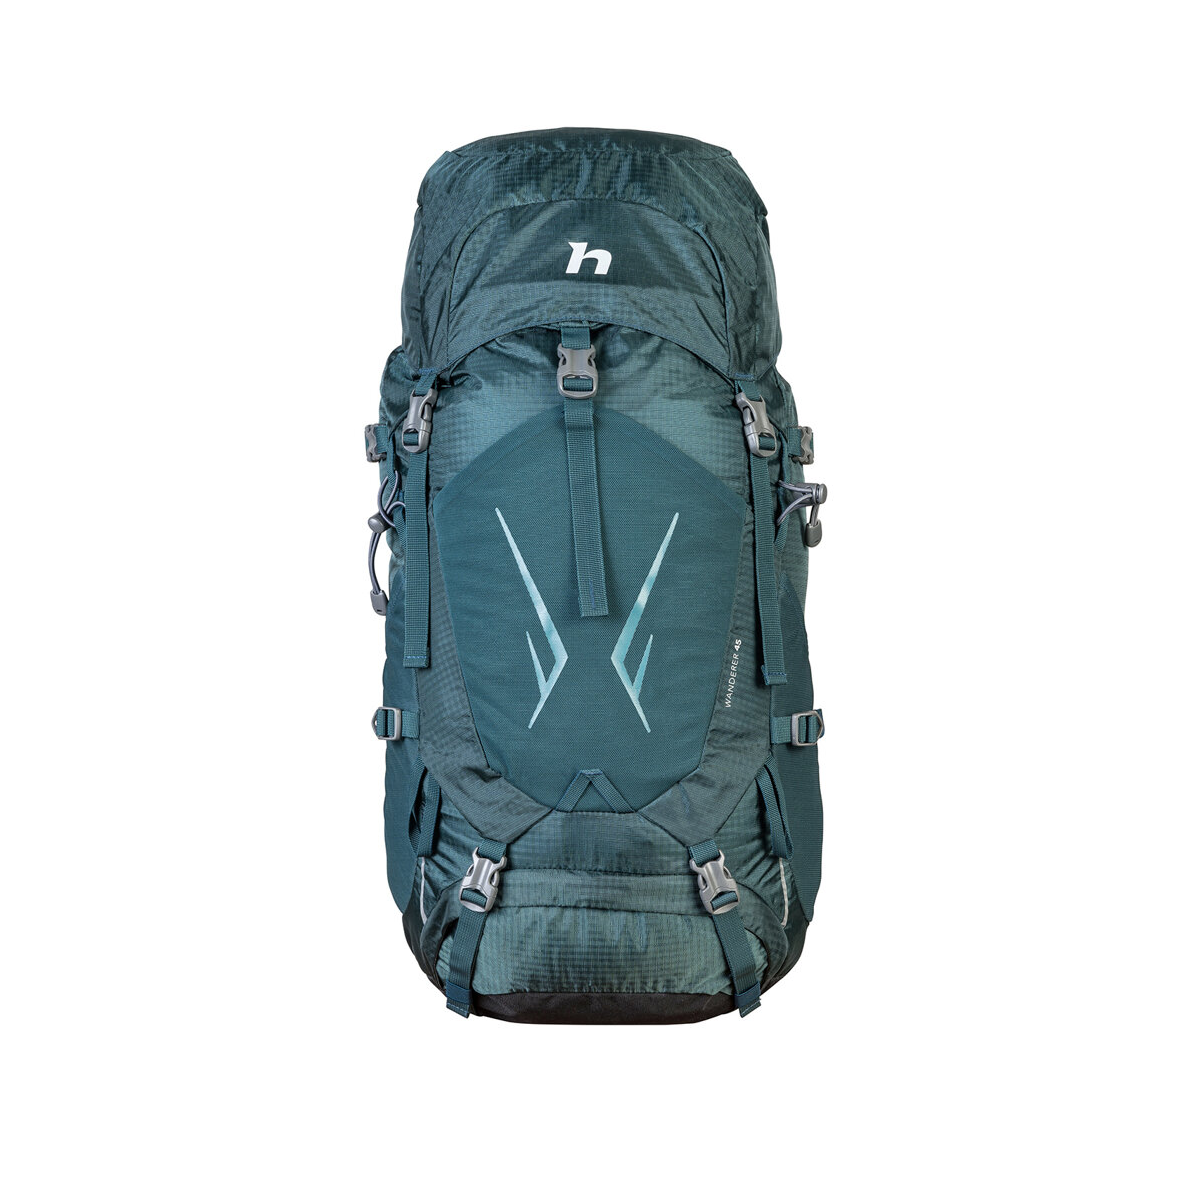 Hannah rugzak Camping Wanderer backpack 45 liter - Blauw